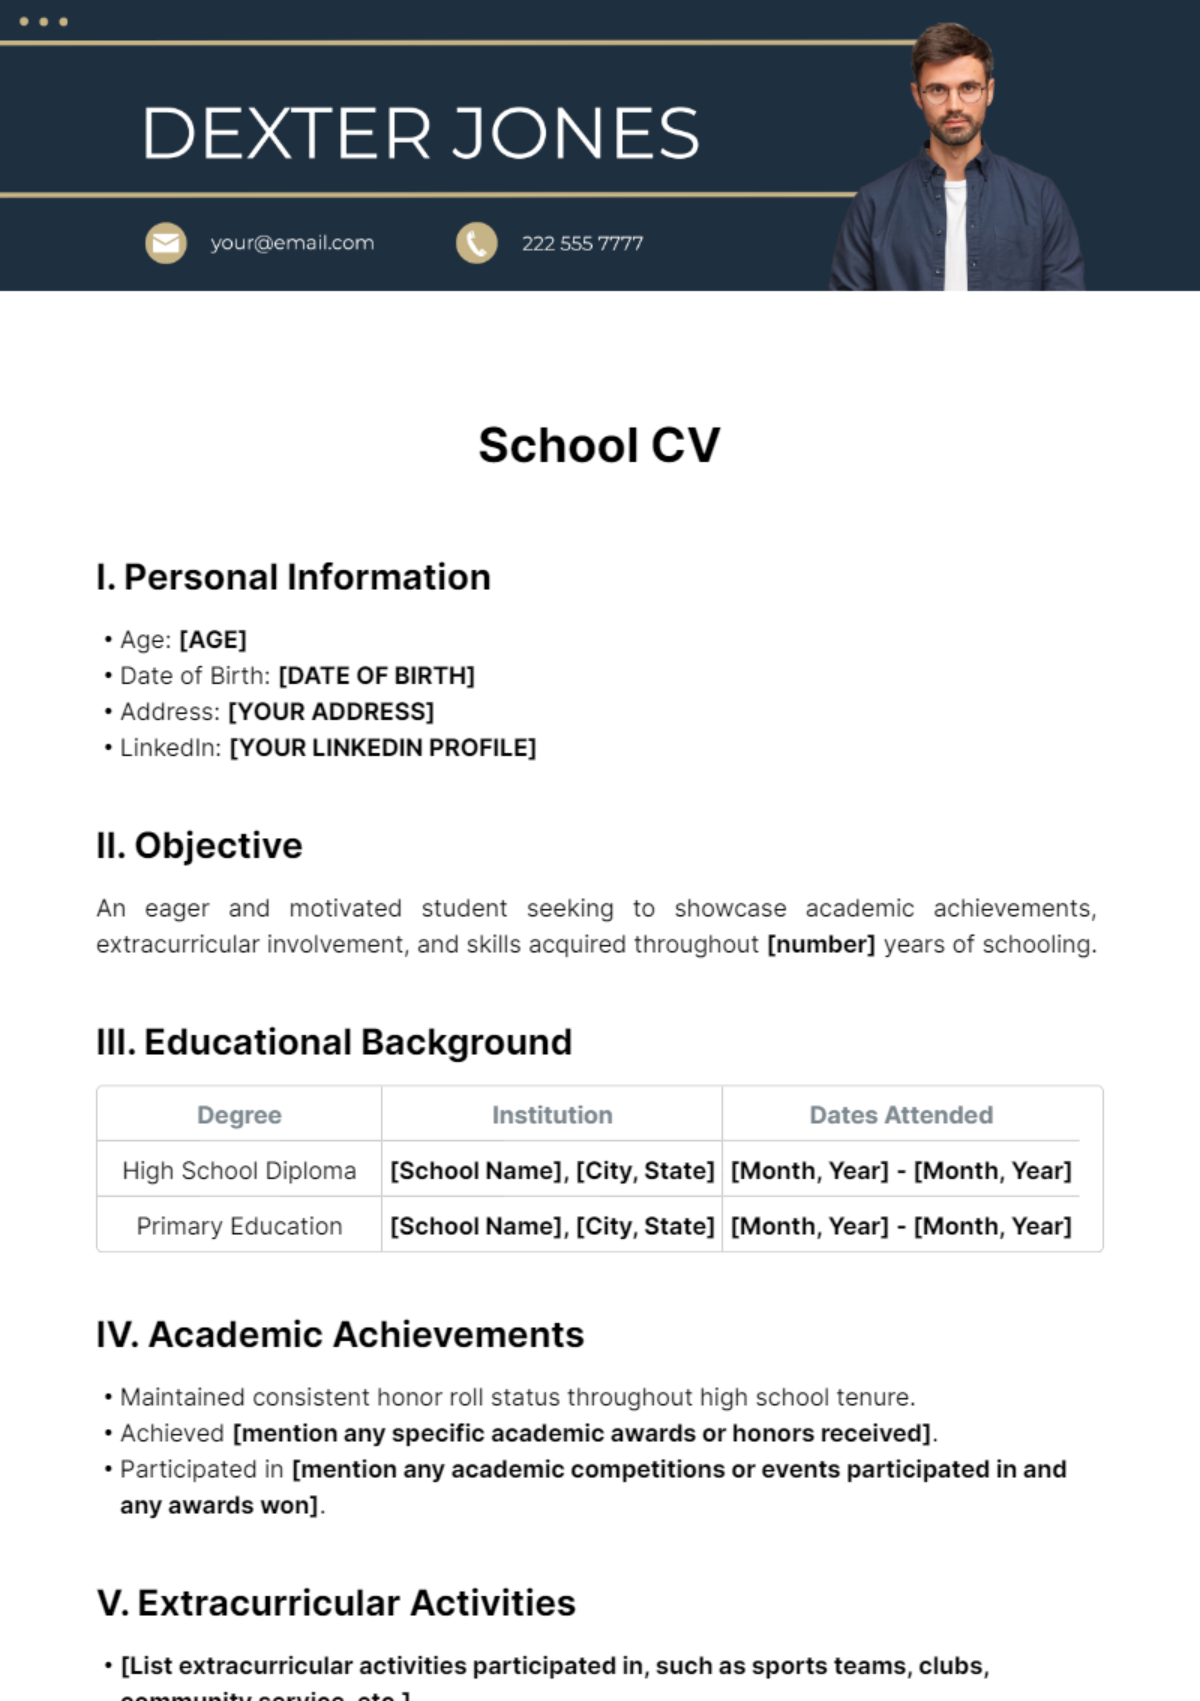 School CV Template